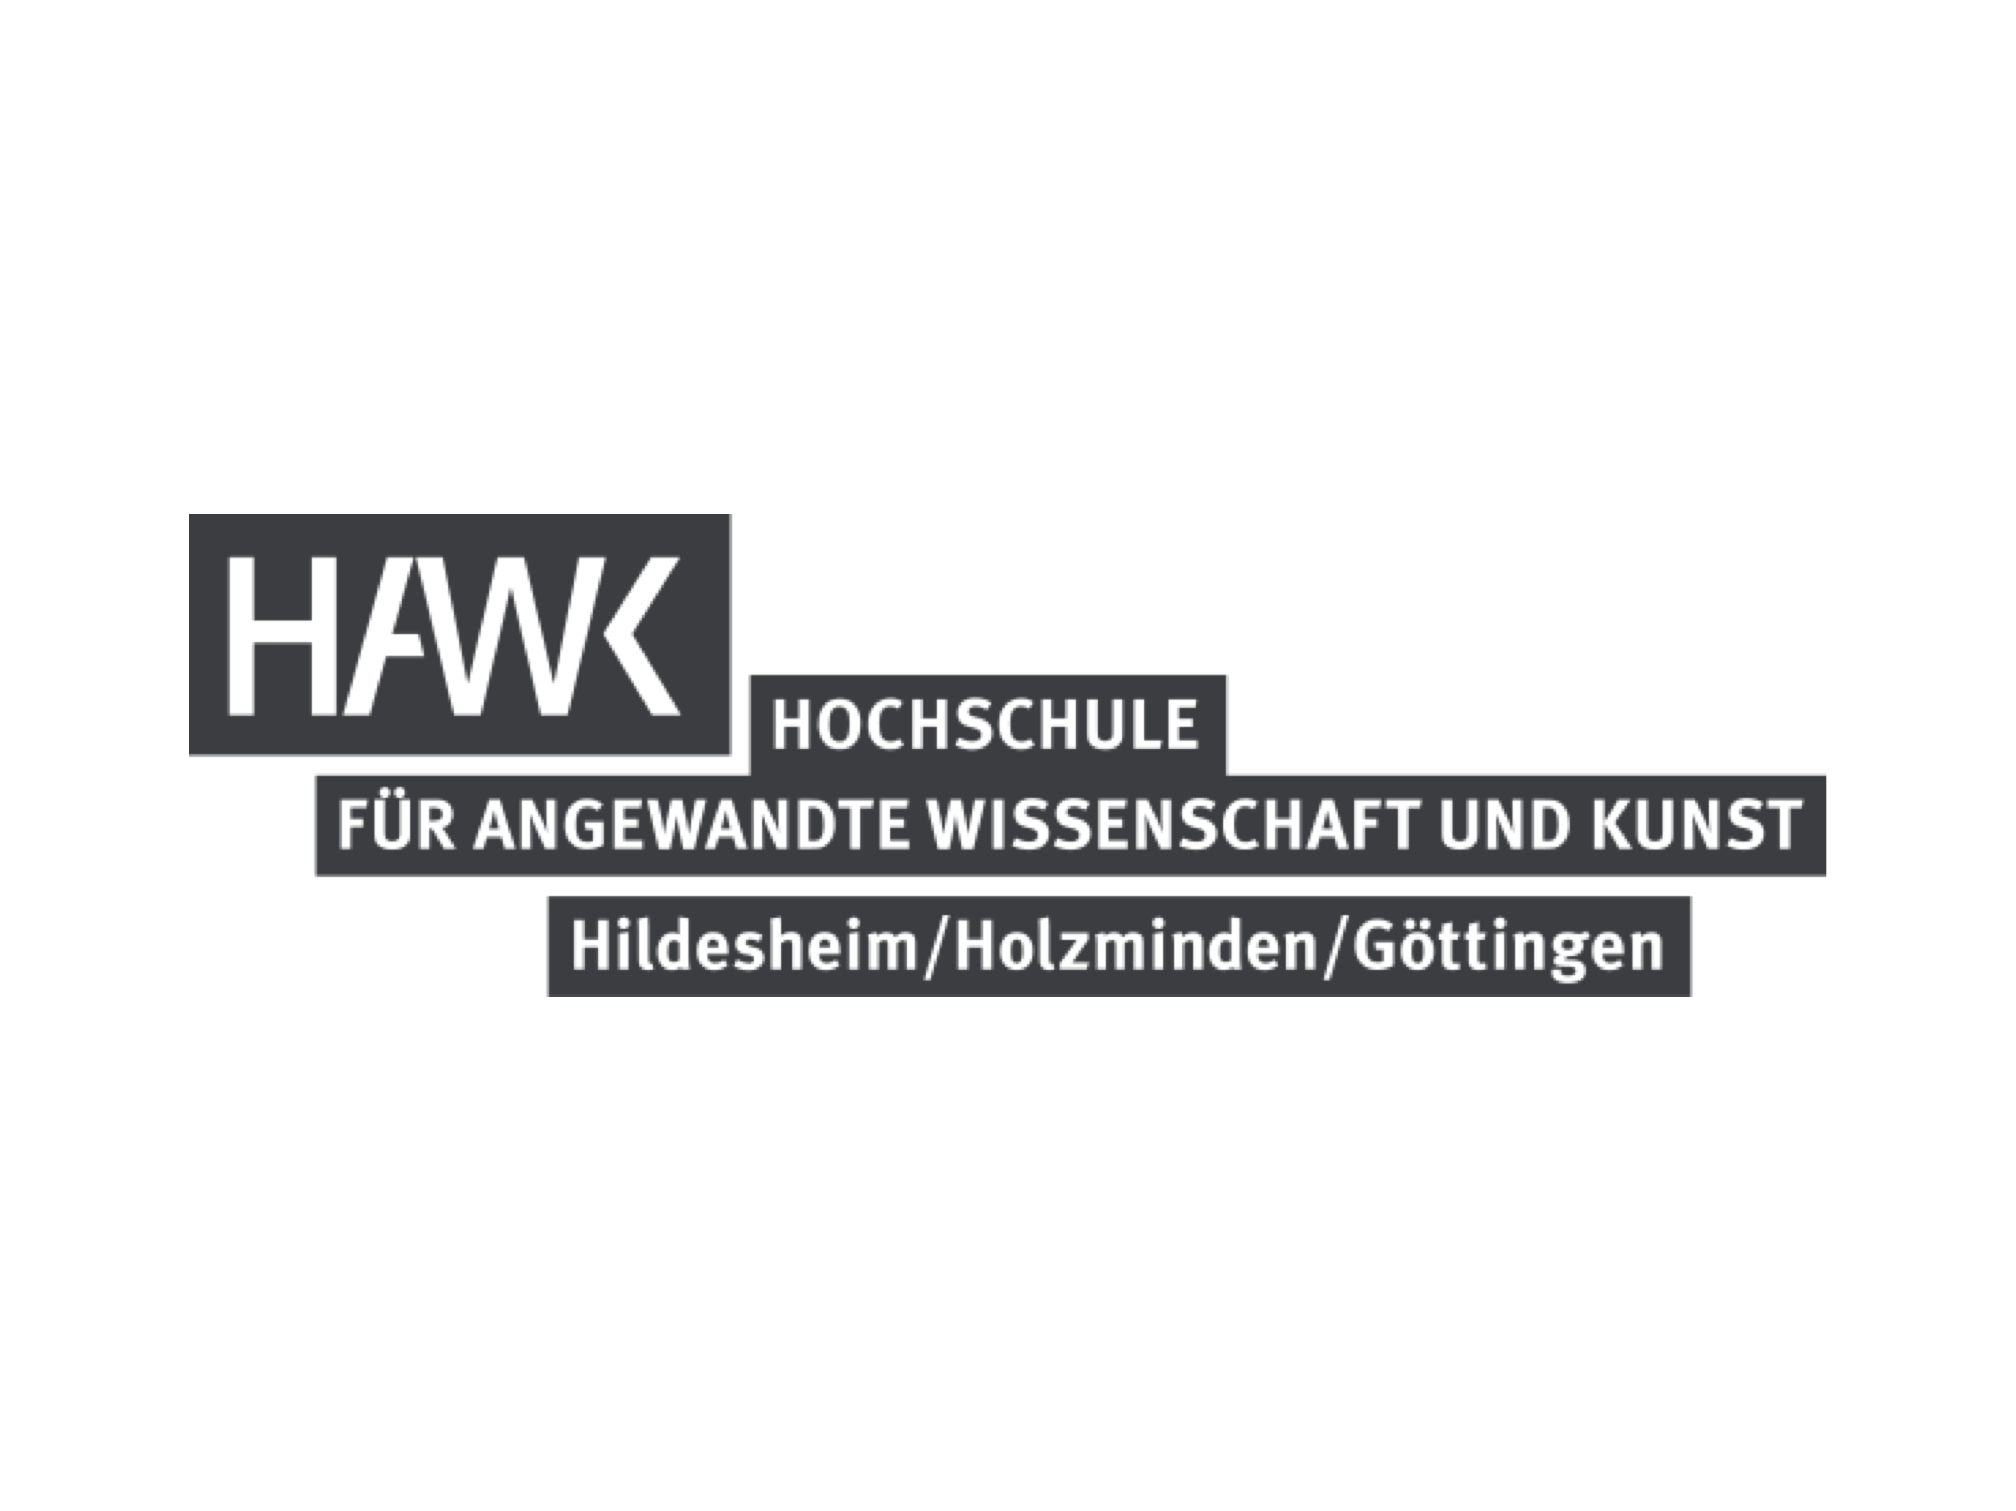 HAWK_43